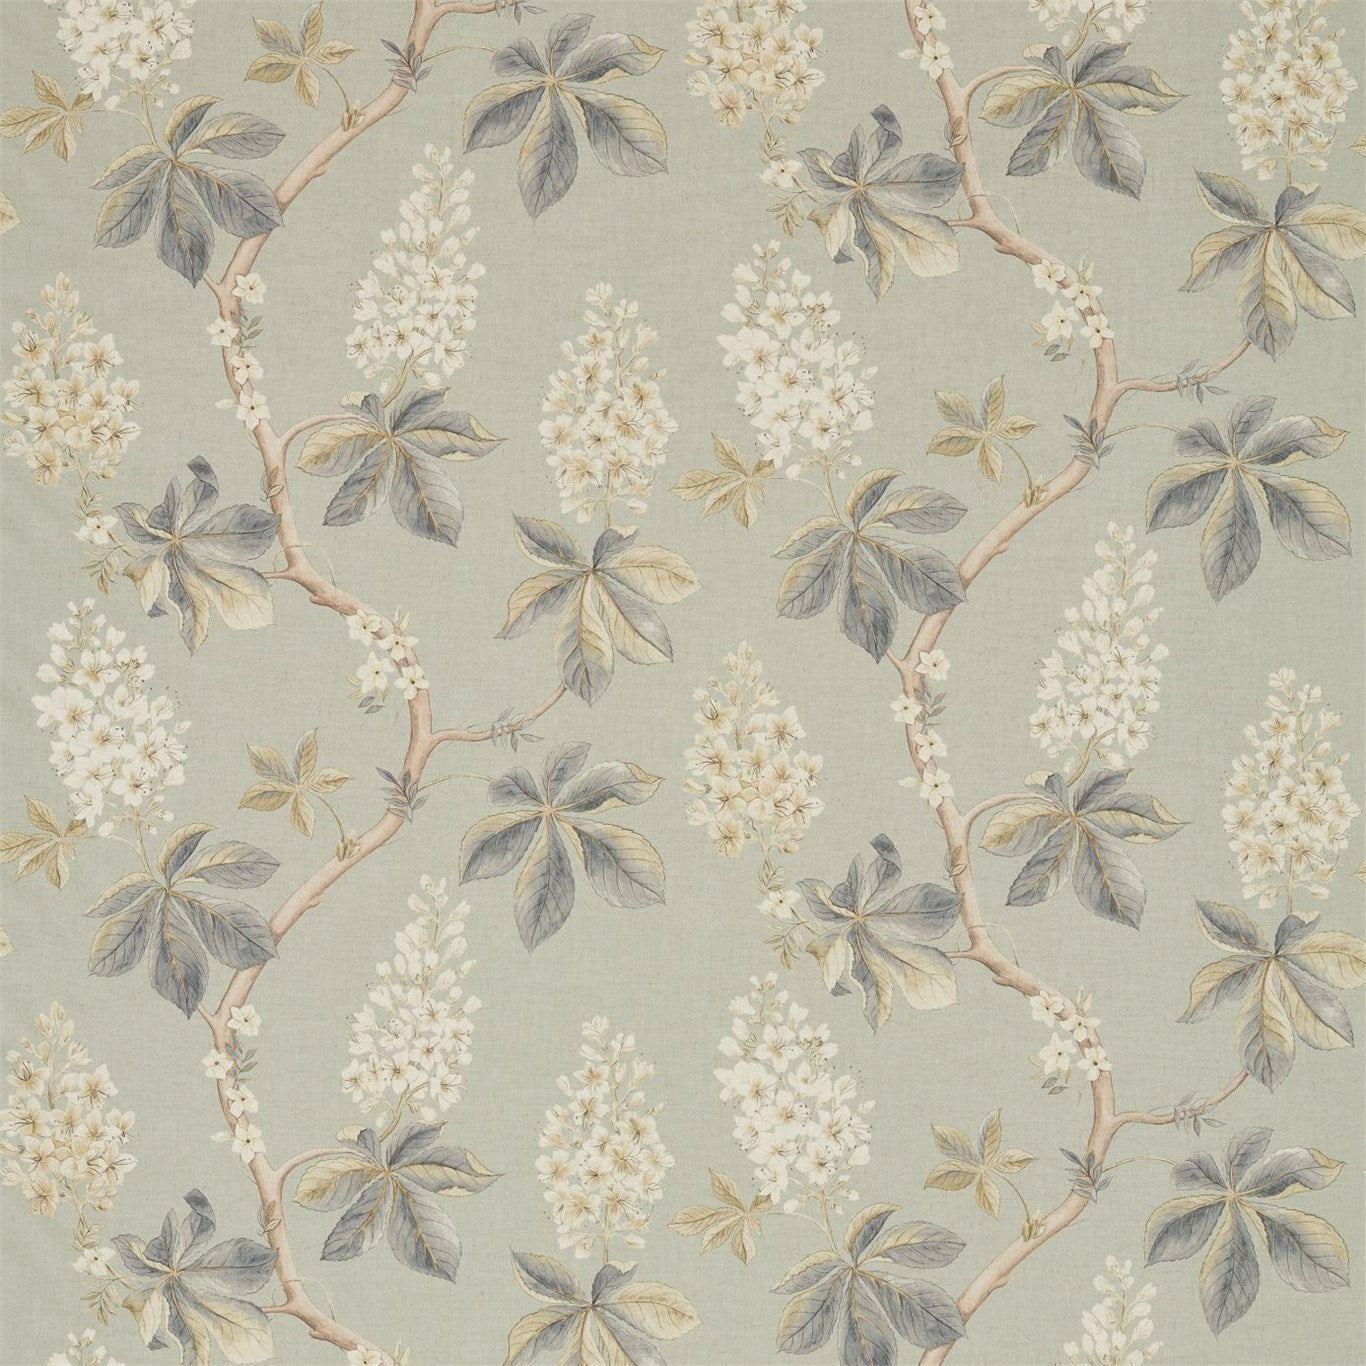 Chestnut Tree Fabric by Sanderson - DWOW225513 - Grey Blue/Sage